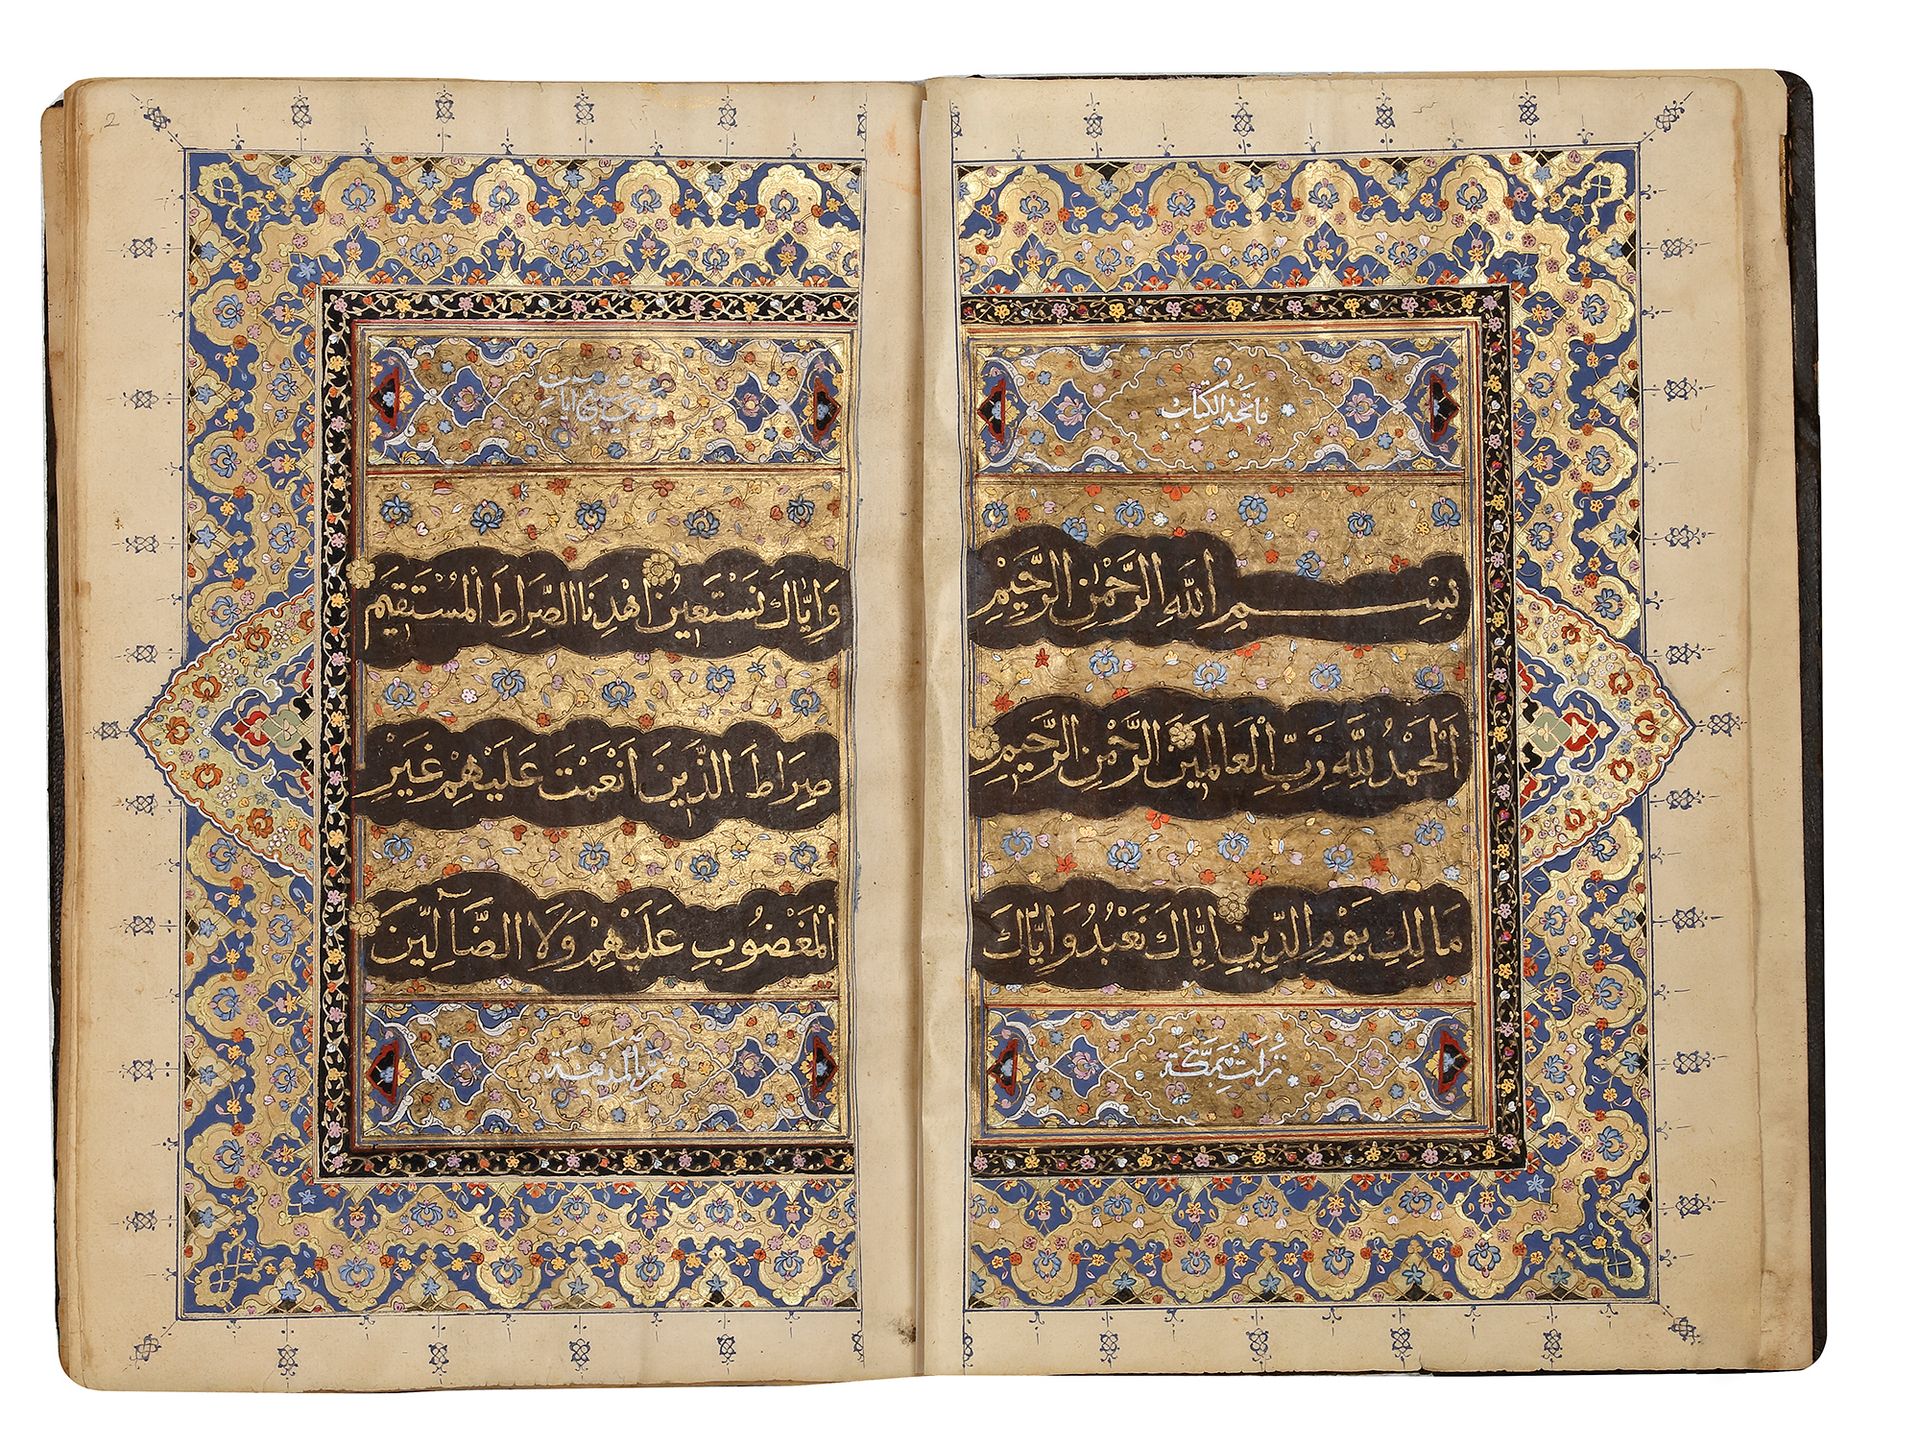 Null 喀什米尔古兰经手抄本，19世纪
纸质阿拉伯手稿，12页，有2个传单，每个对开页都有15行优雅的多色纳斯赫字体，黑色装饰地面，金色圆环诗句标记，金色和多&hellip;